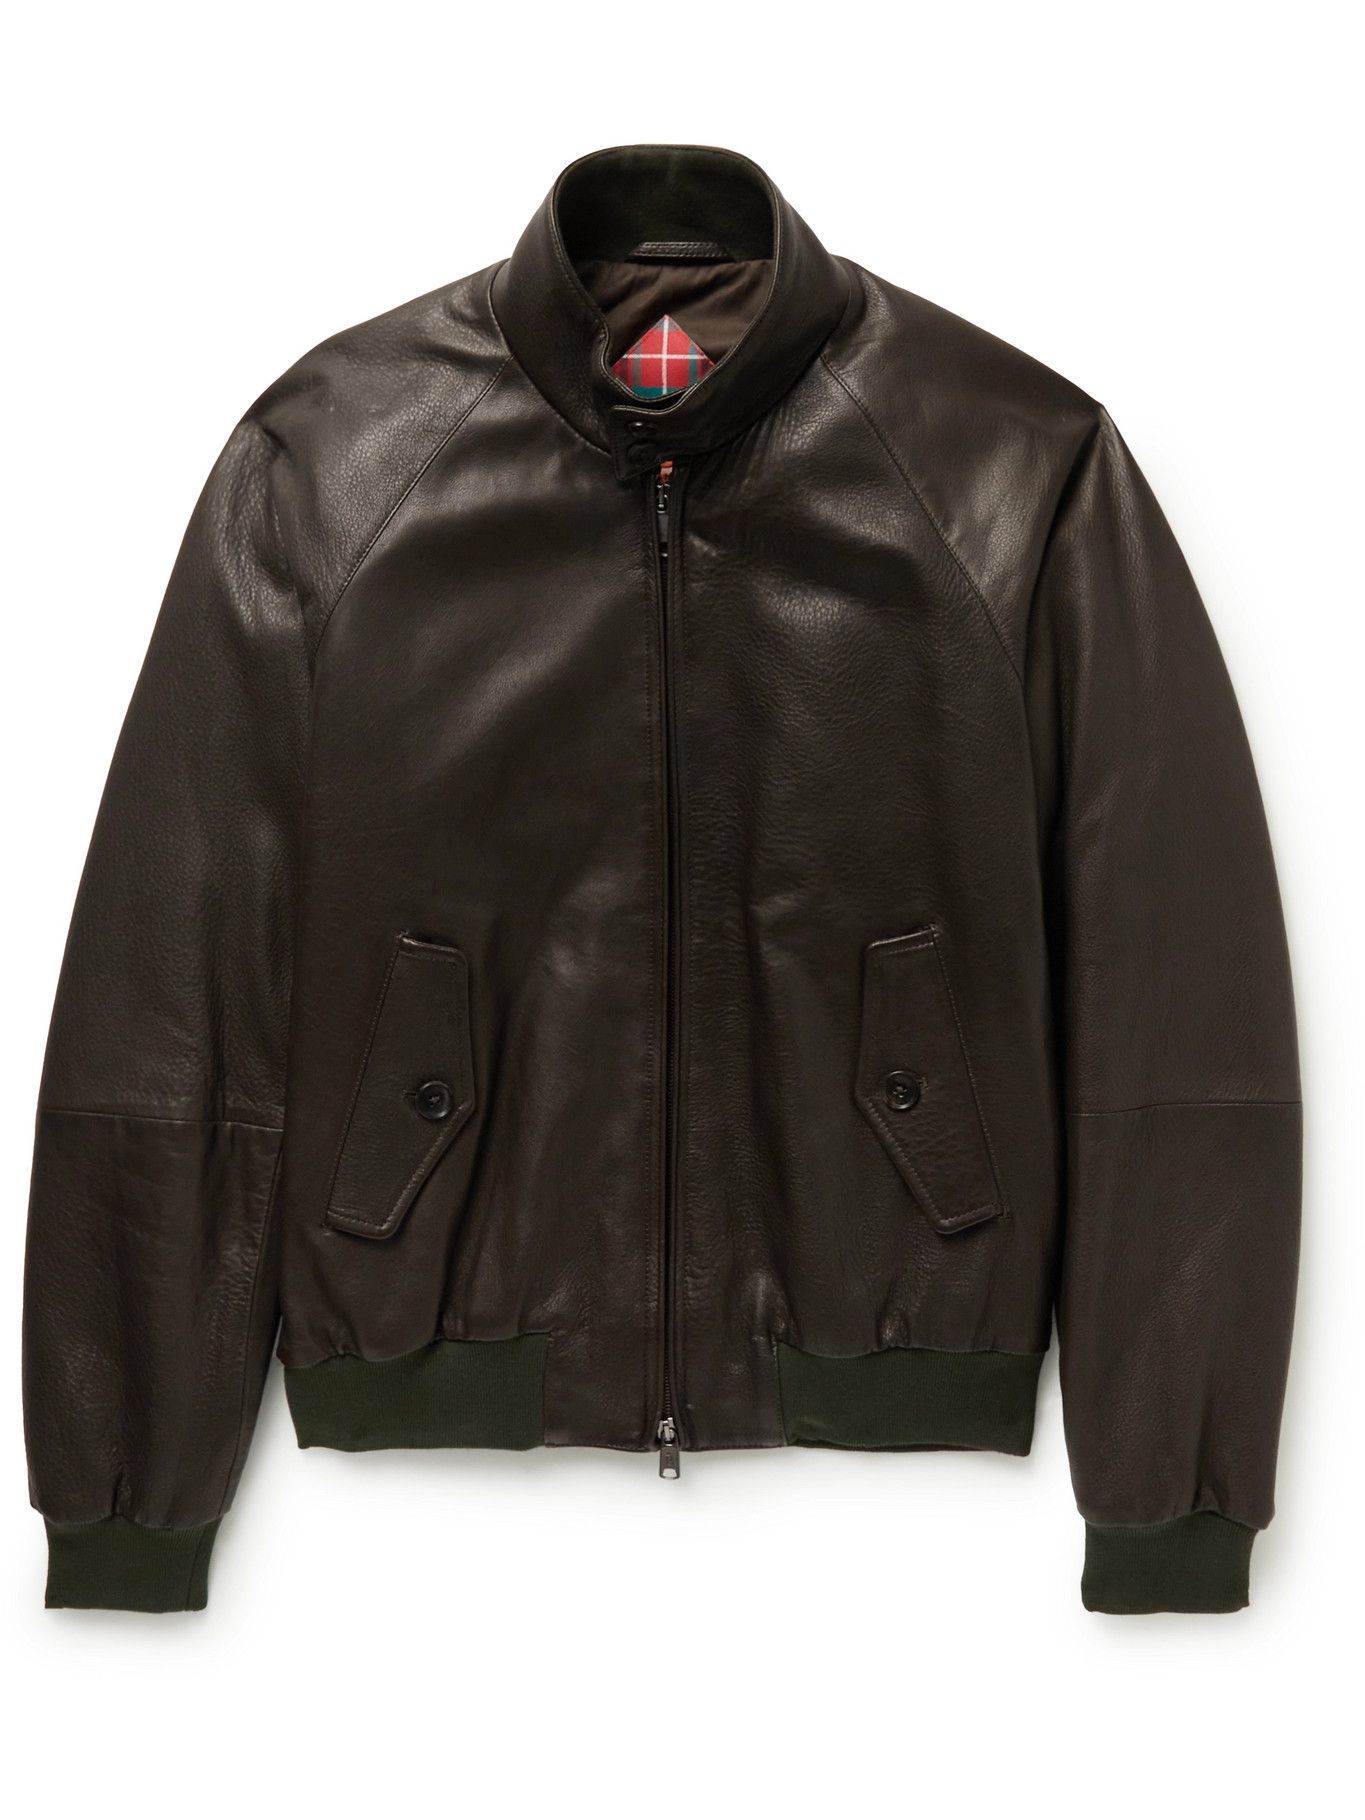 Baracuta - G9 Leather Harrington Jacket - Green Baracuta